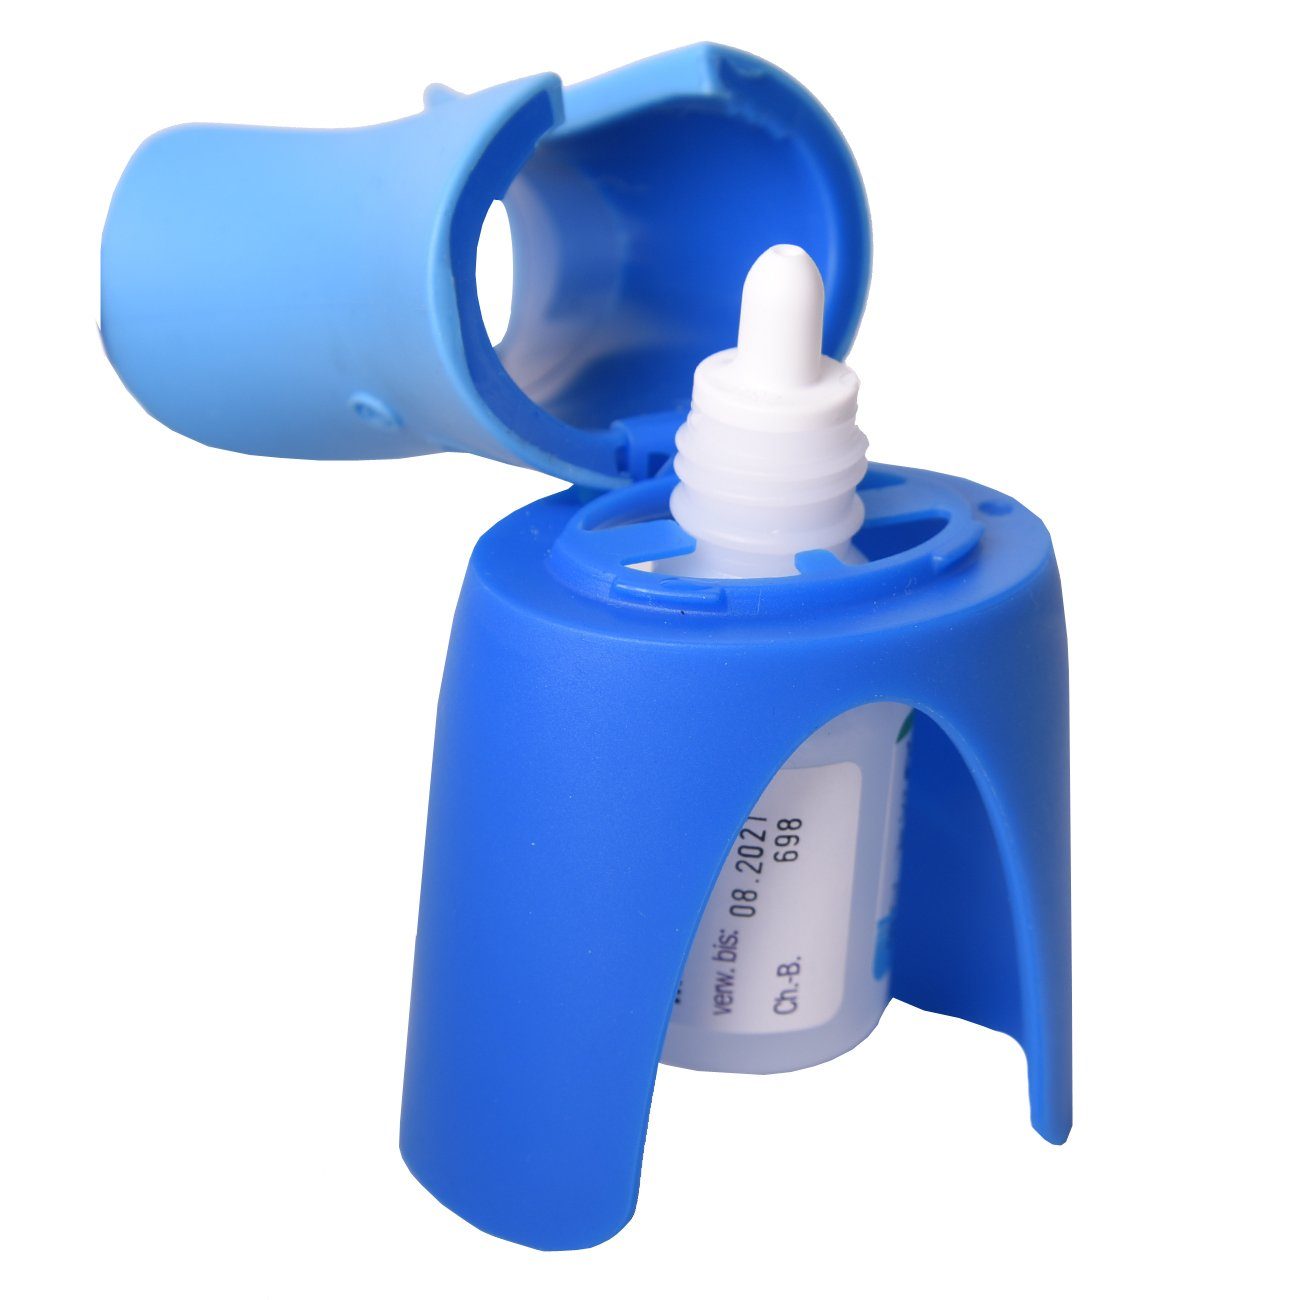 Premium Applikationshelfer Augentropfen-Hilfe Augenpflege-Set Remedic Blau